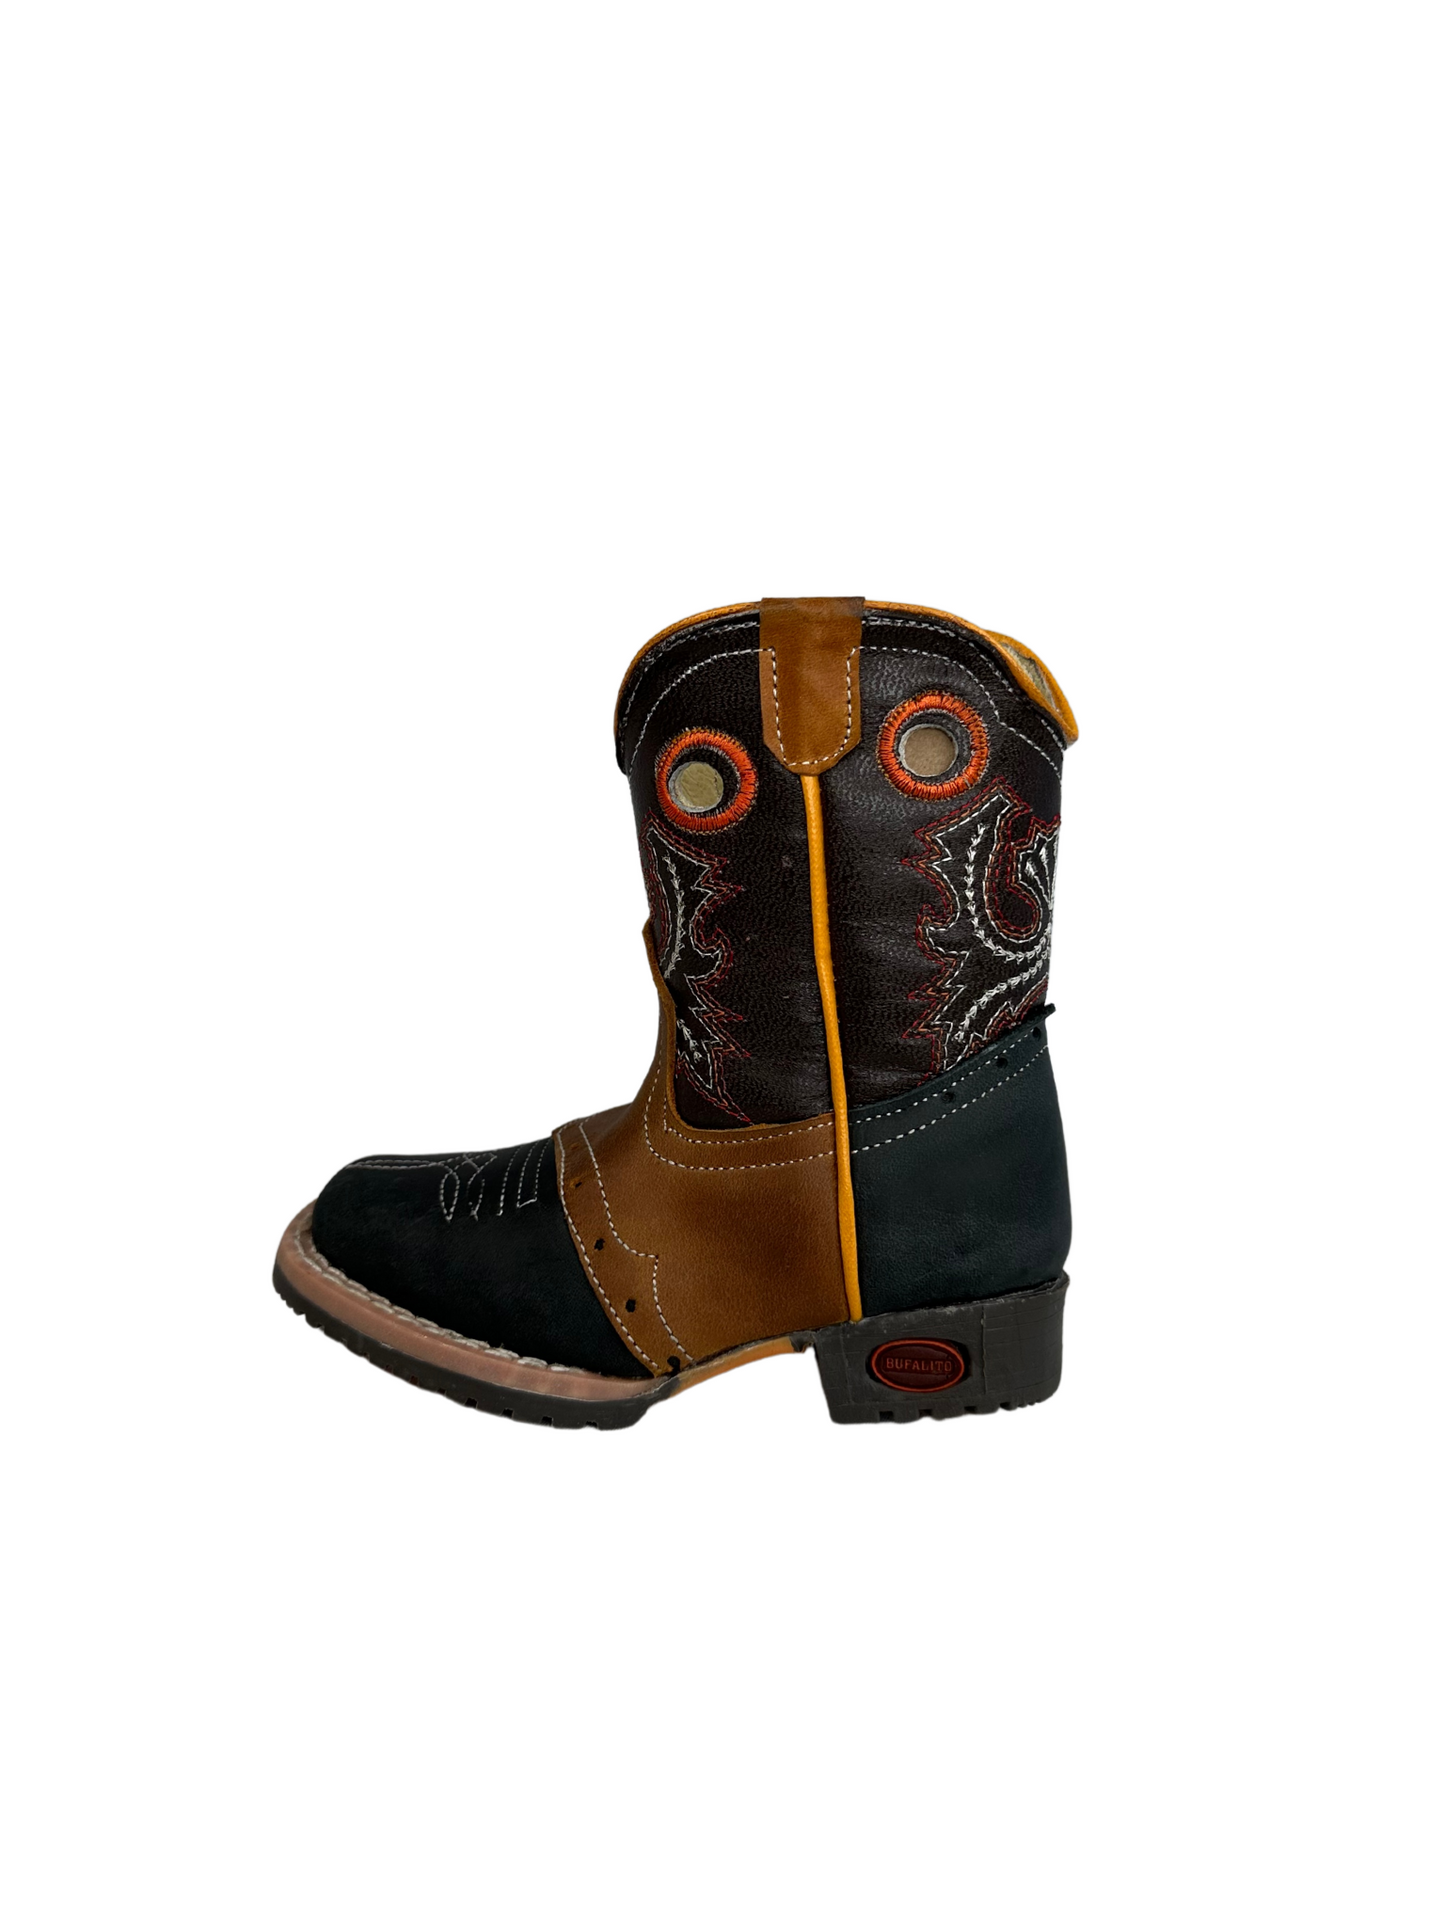 El General Boy's Brown/Black Leather Boot